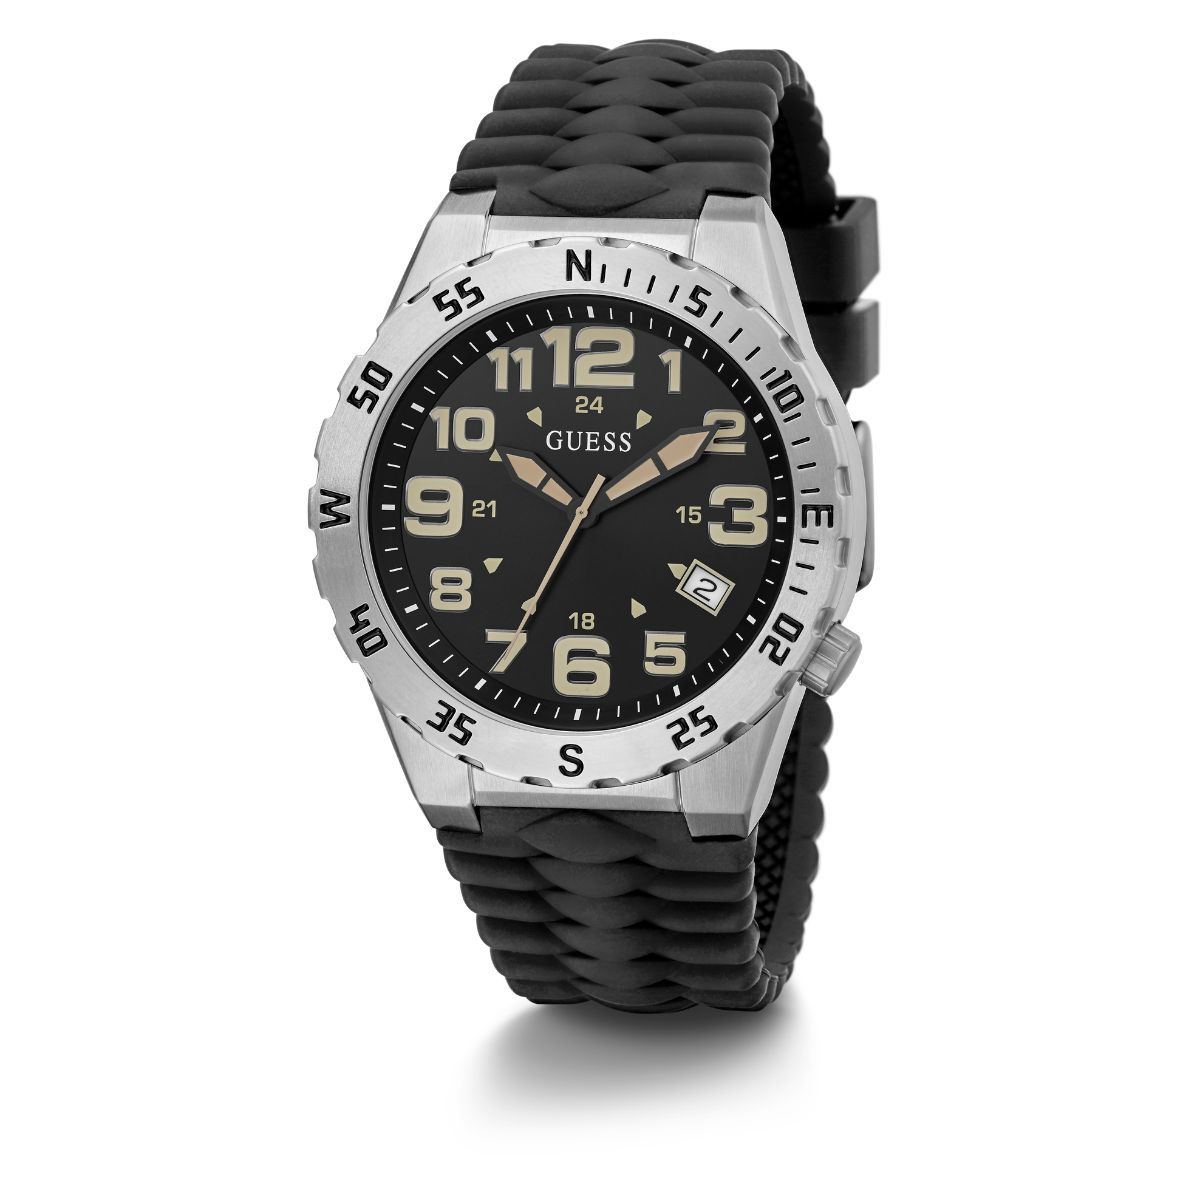 Men's Cool Trend LED Sports Dual Display Digital Watch Multifunction Watch  | eBay